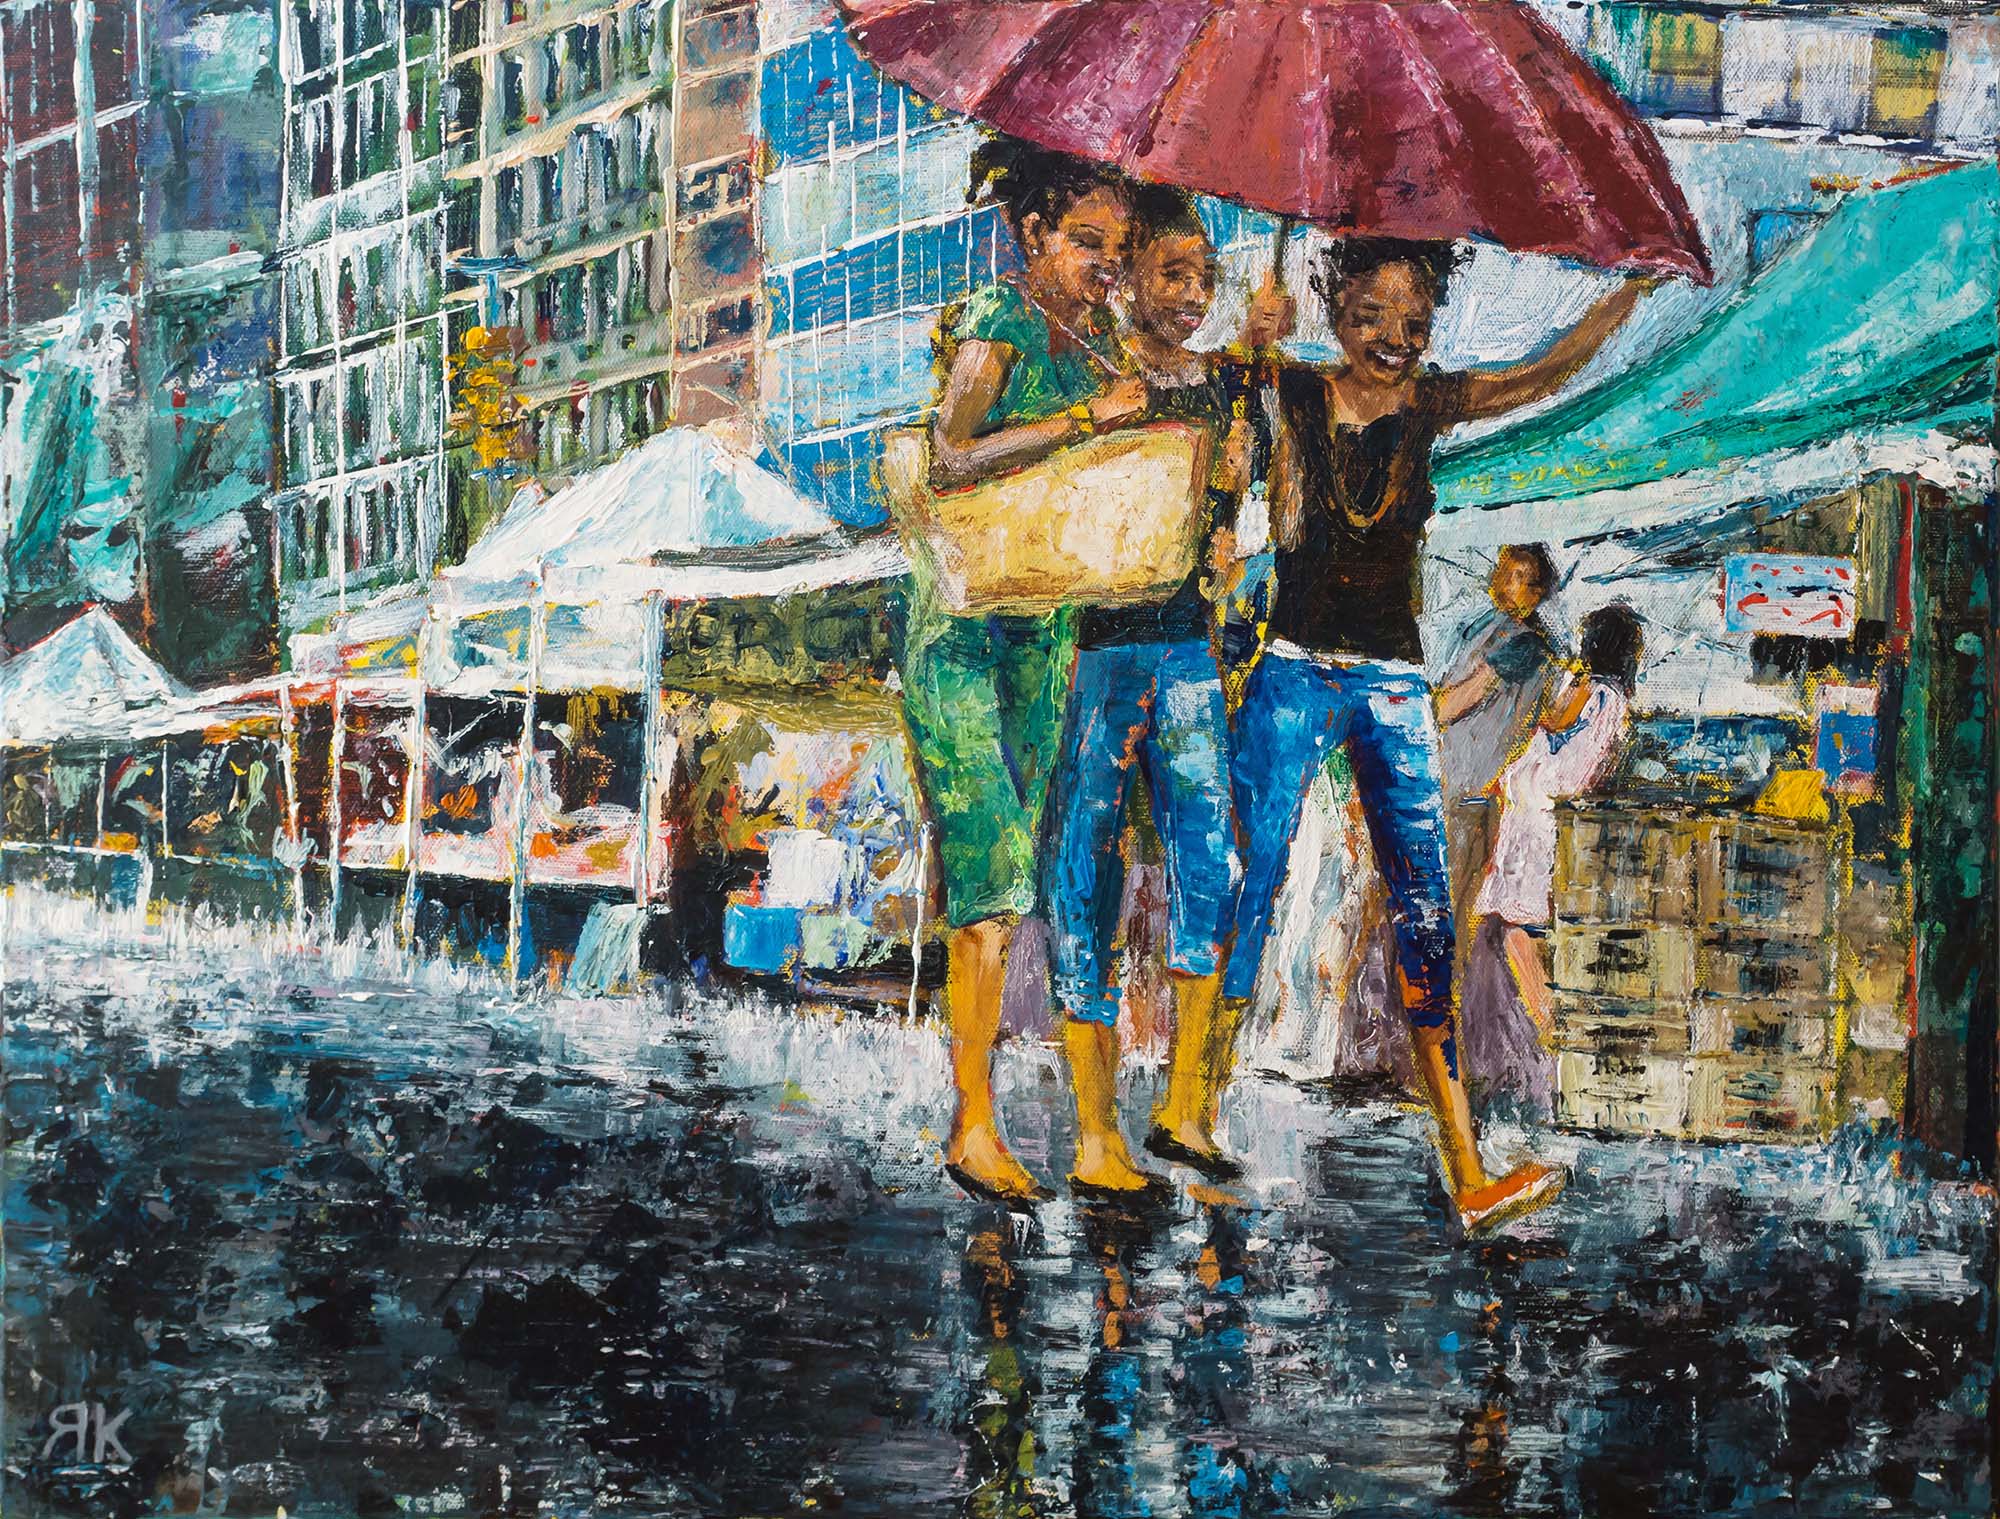 Three girls walking under an umbrella in the rain in New York by Ria Kieboom